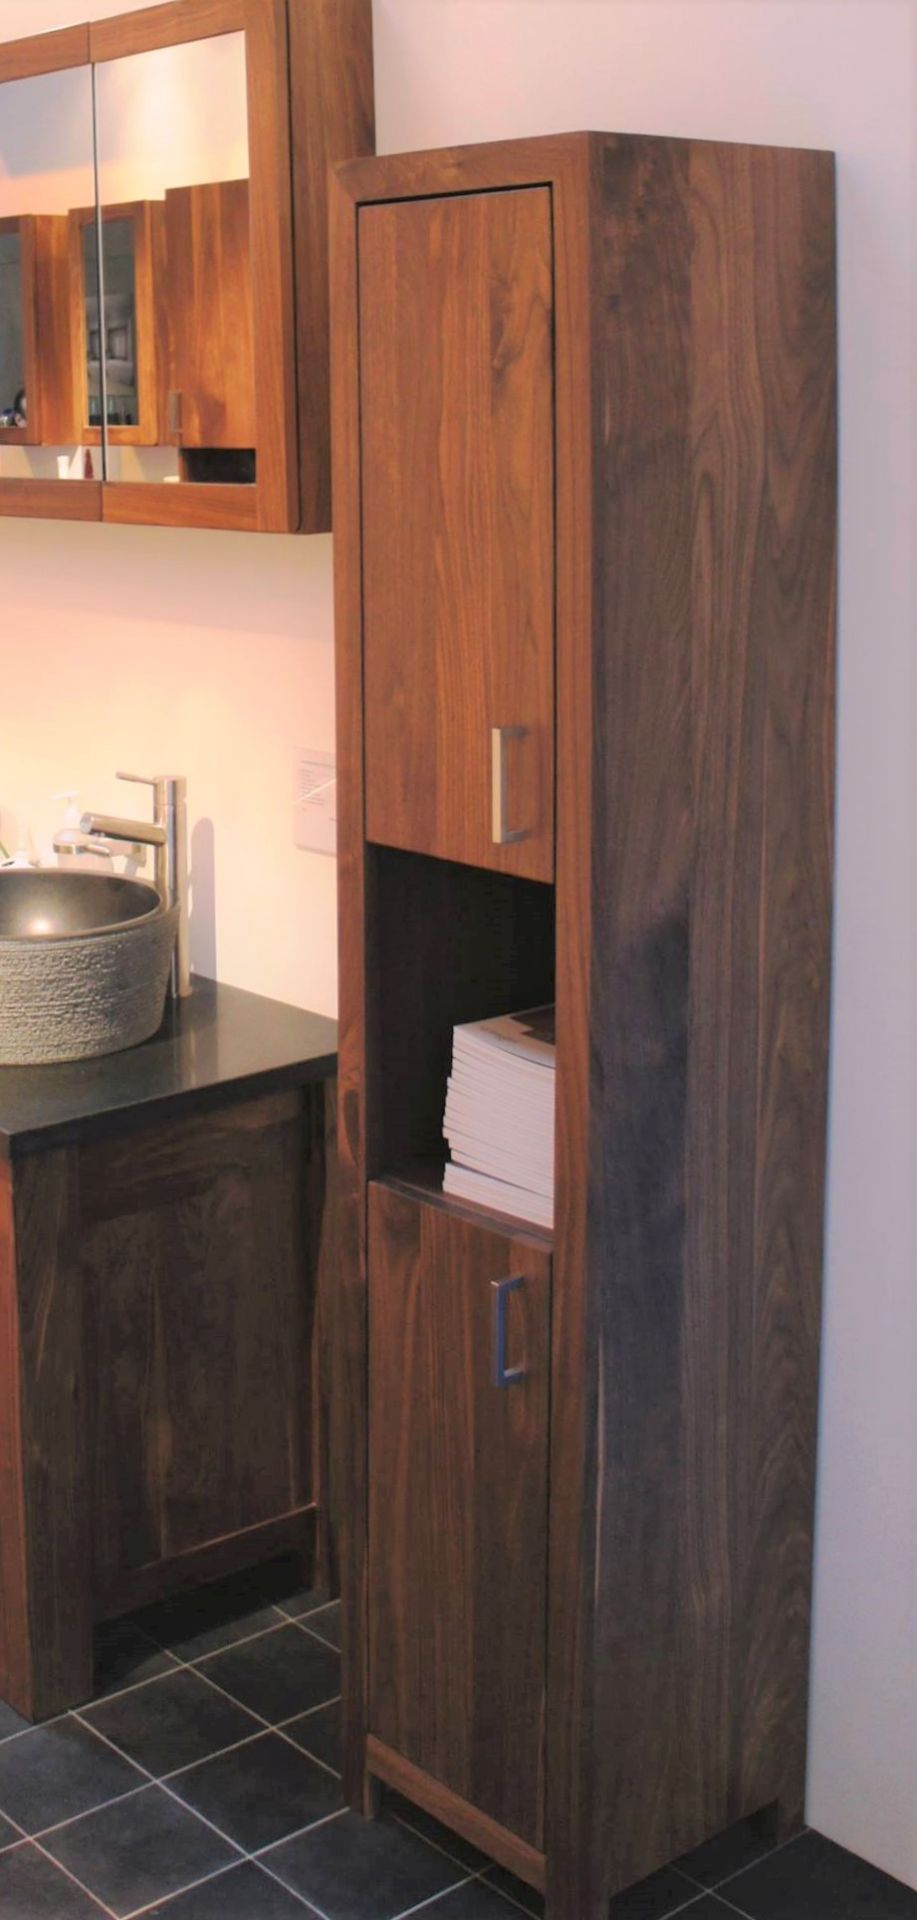 1 x Stonearth Freestanding Tallboy Bathroom Storage Cabinet - American Solid Walnut - RRP £996! - Image 2 of 14